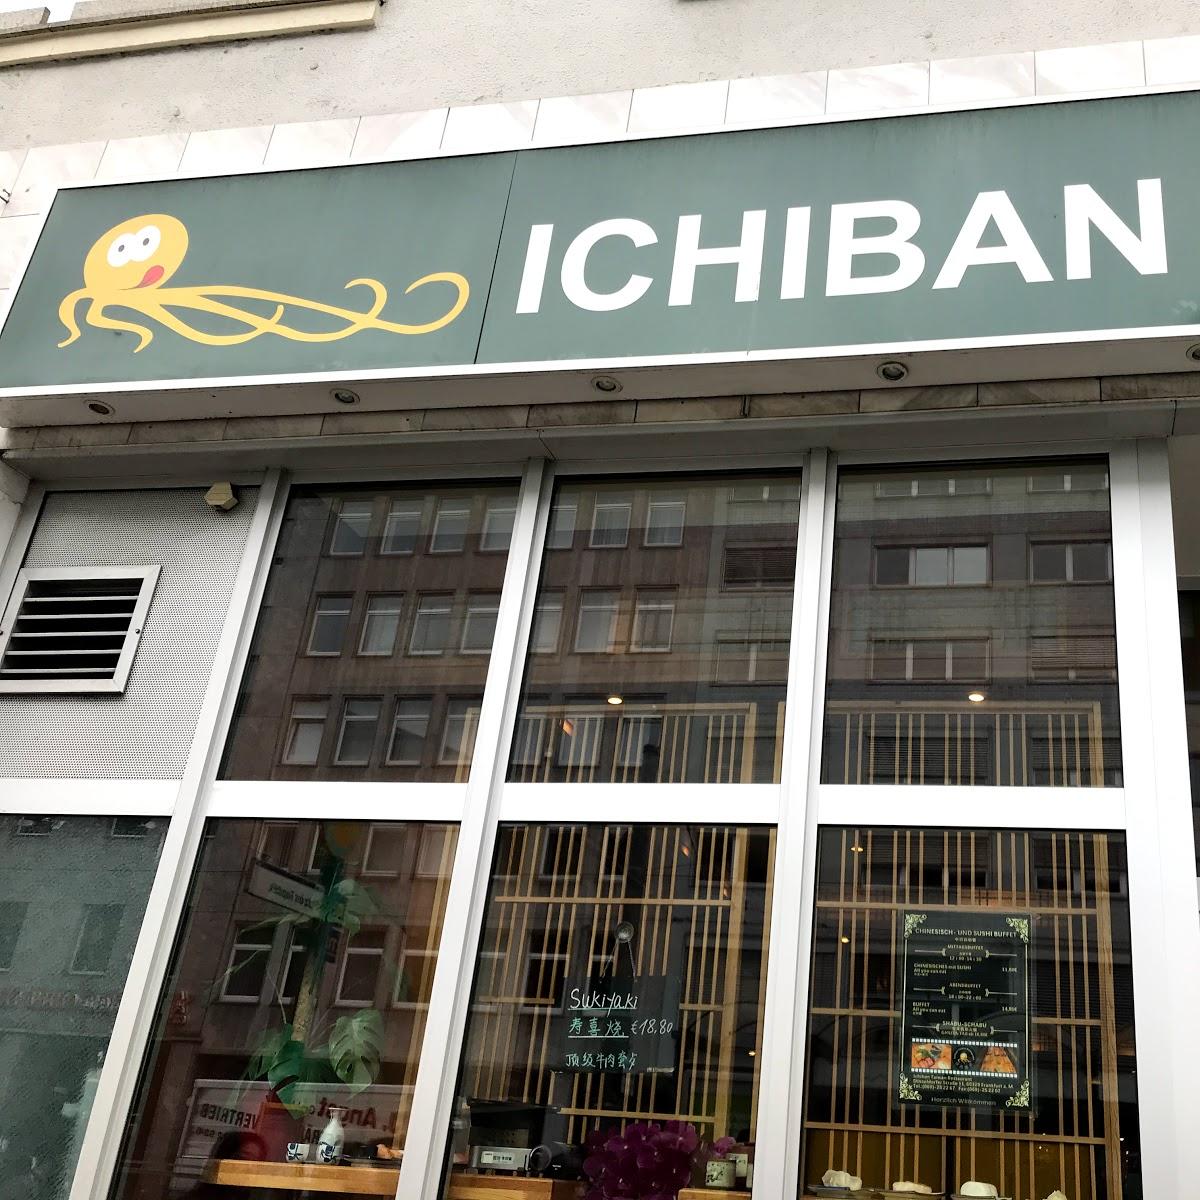 Restaurant "Ichiban-Taiwan" in Frankfurt am Main